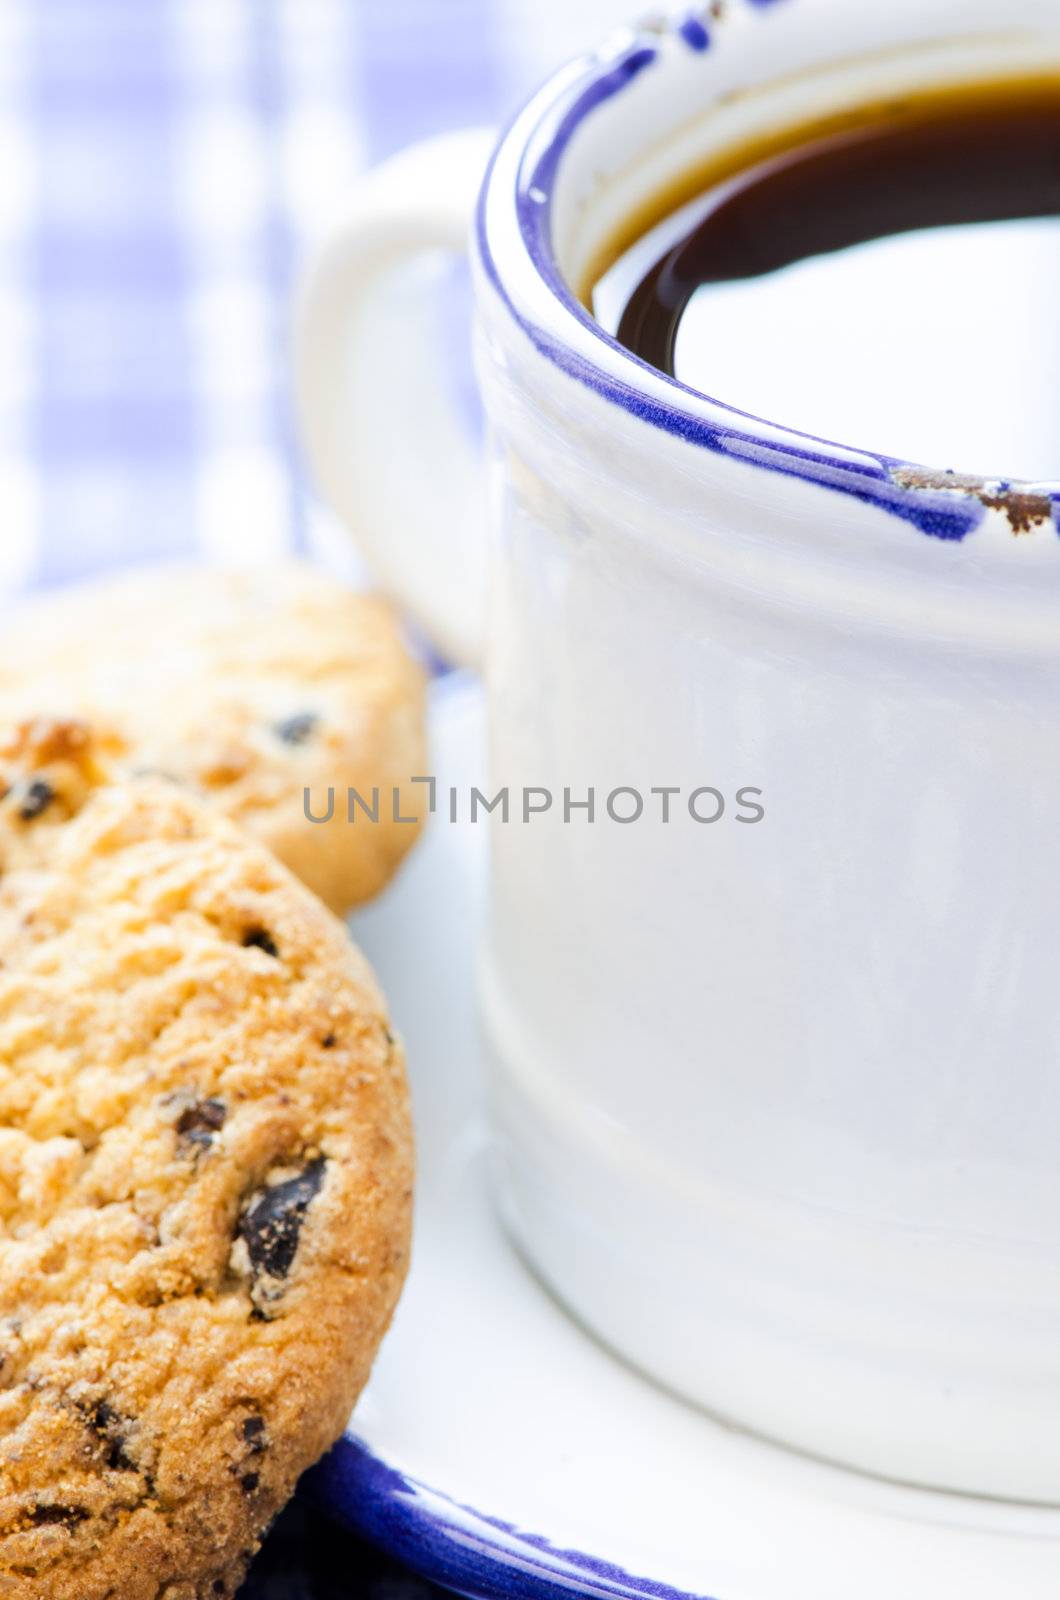 Cofee and cookies by Nanisimova